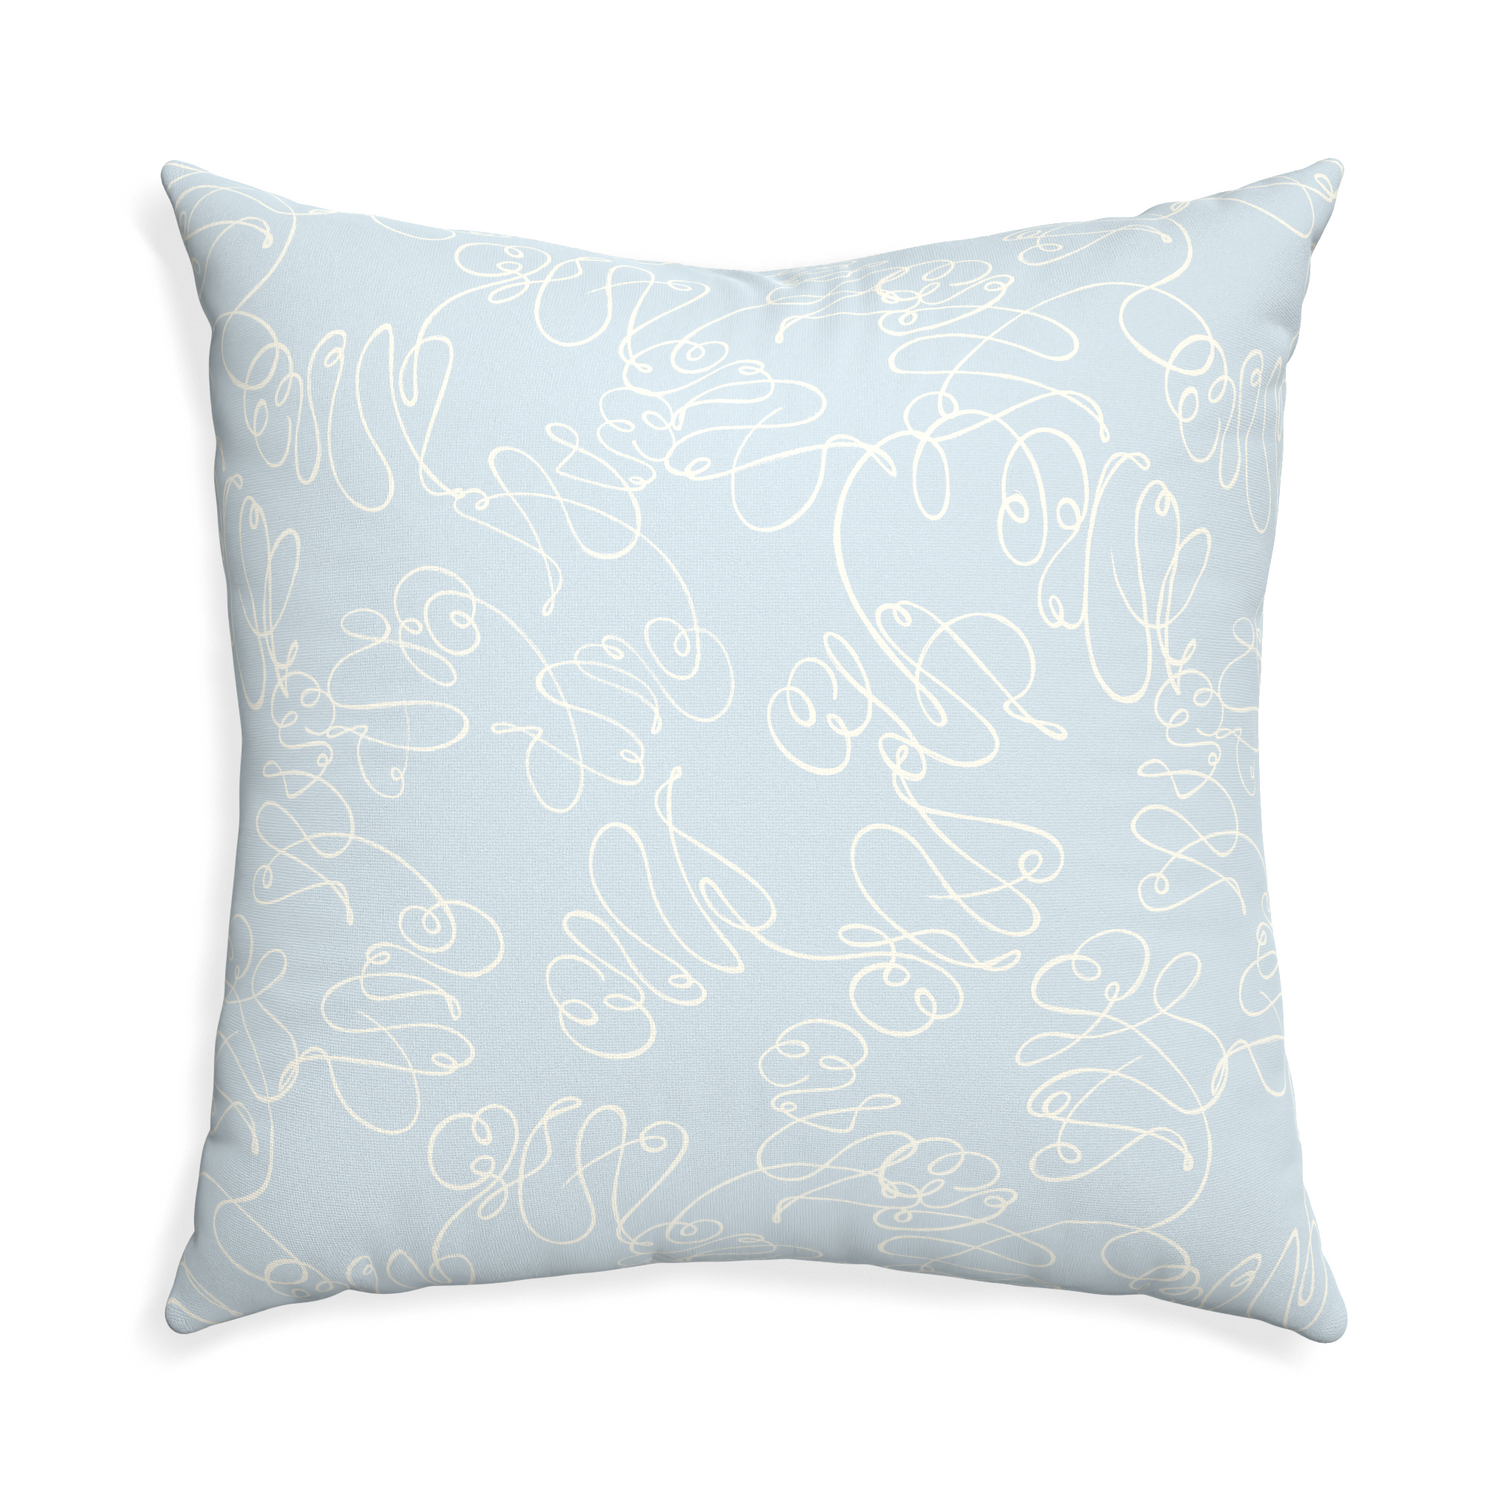 Euro-sham mirabella custom pillow with none on white background